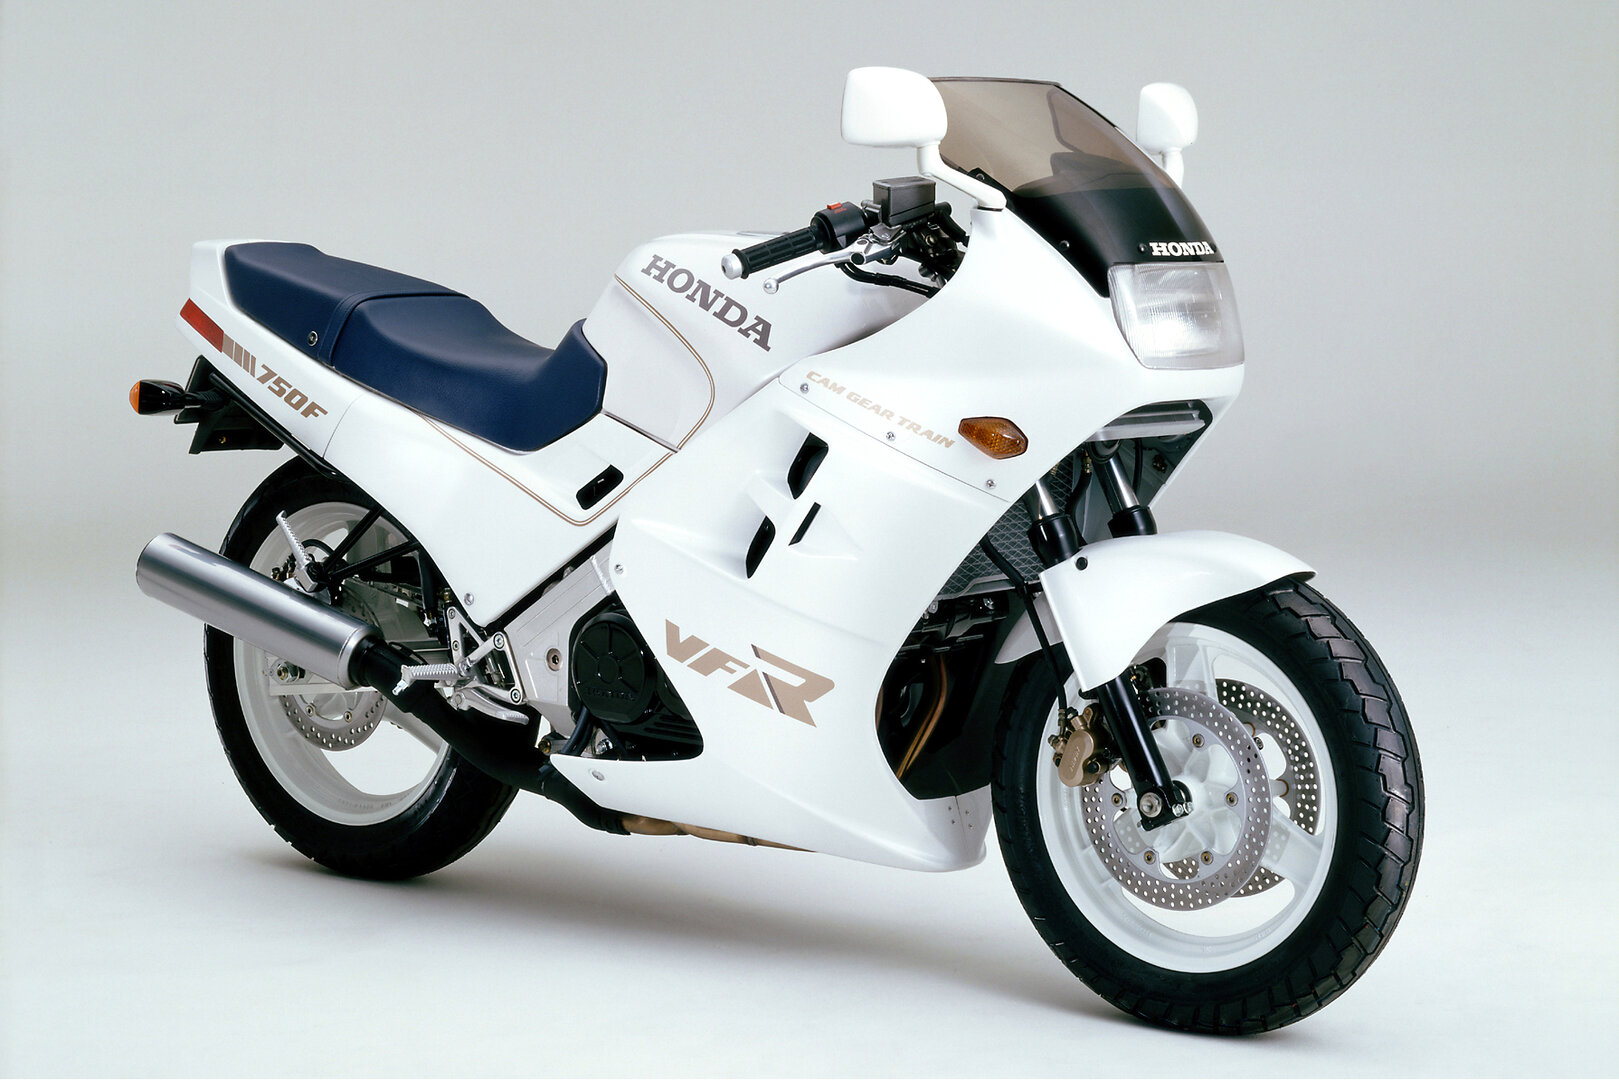 Moto del día: Honda VFR 750 F (RC24)